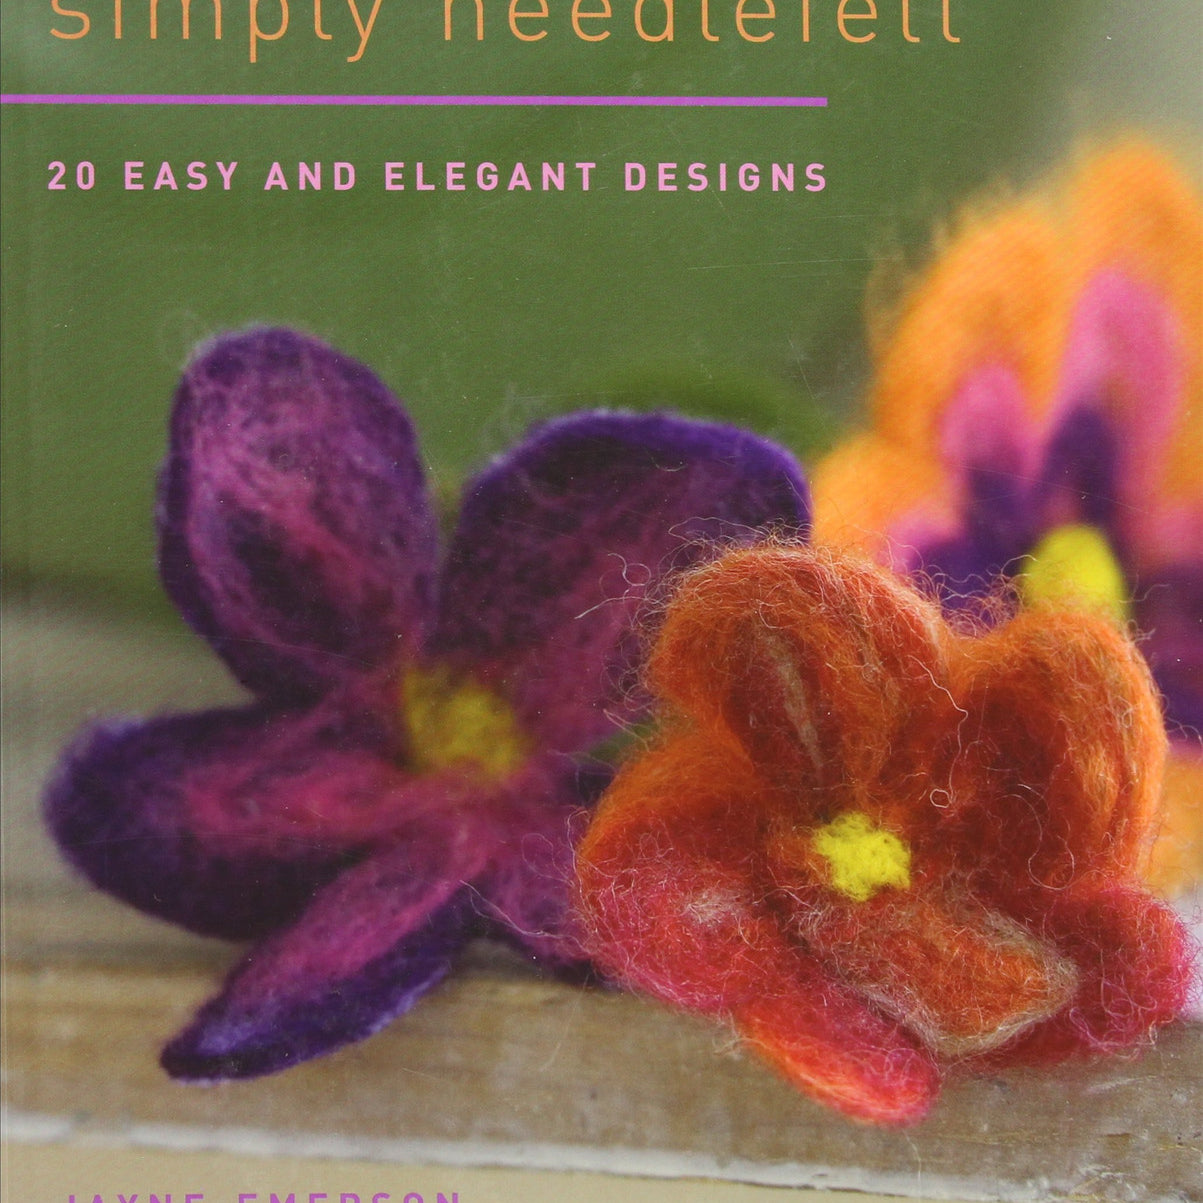 Simply Needlefelt Book by Jayne Emerson